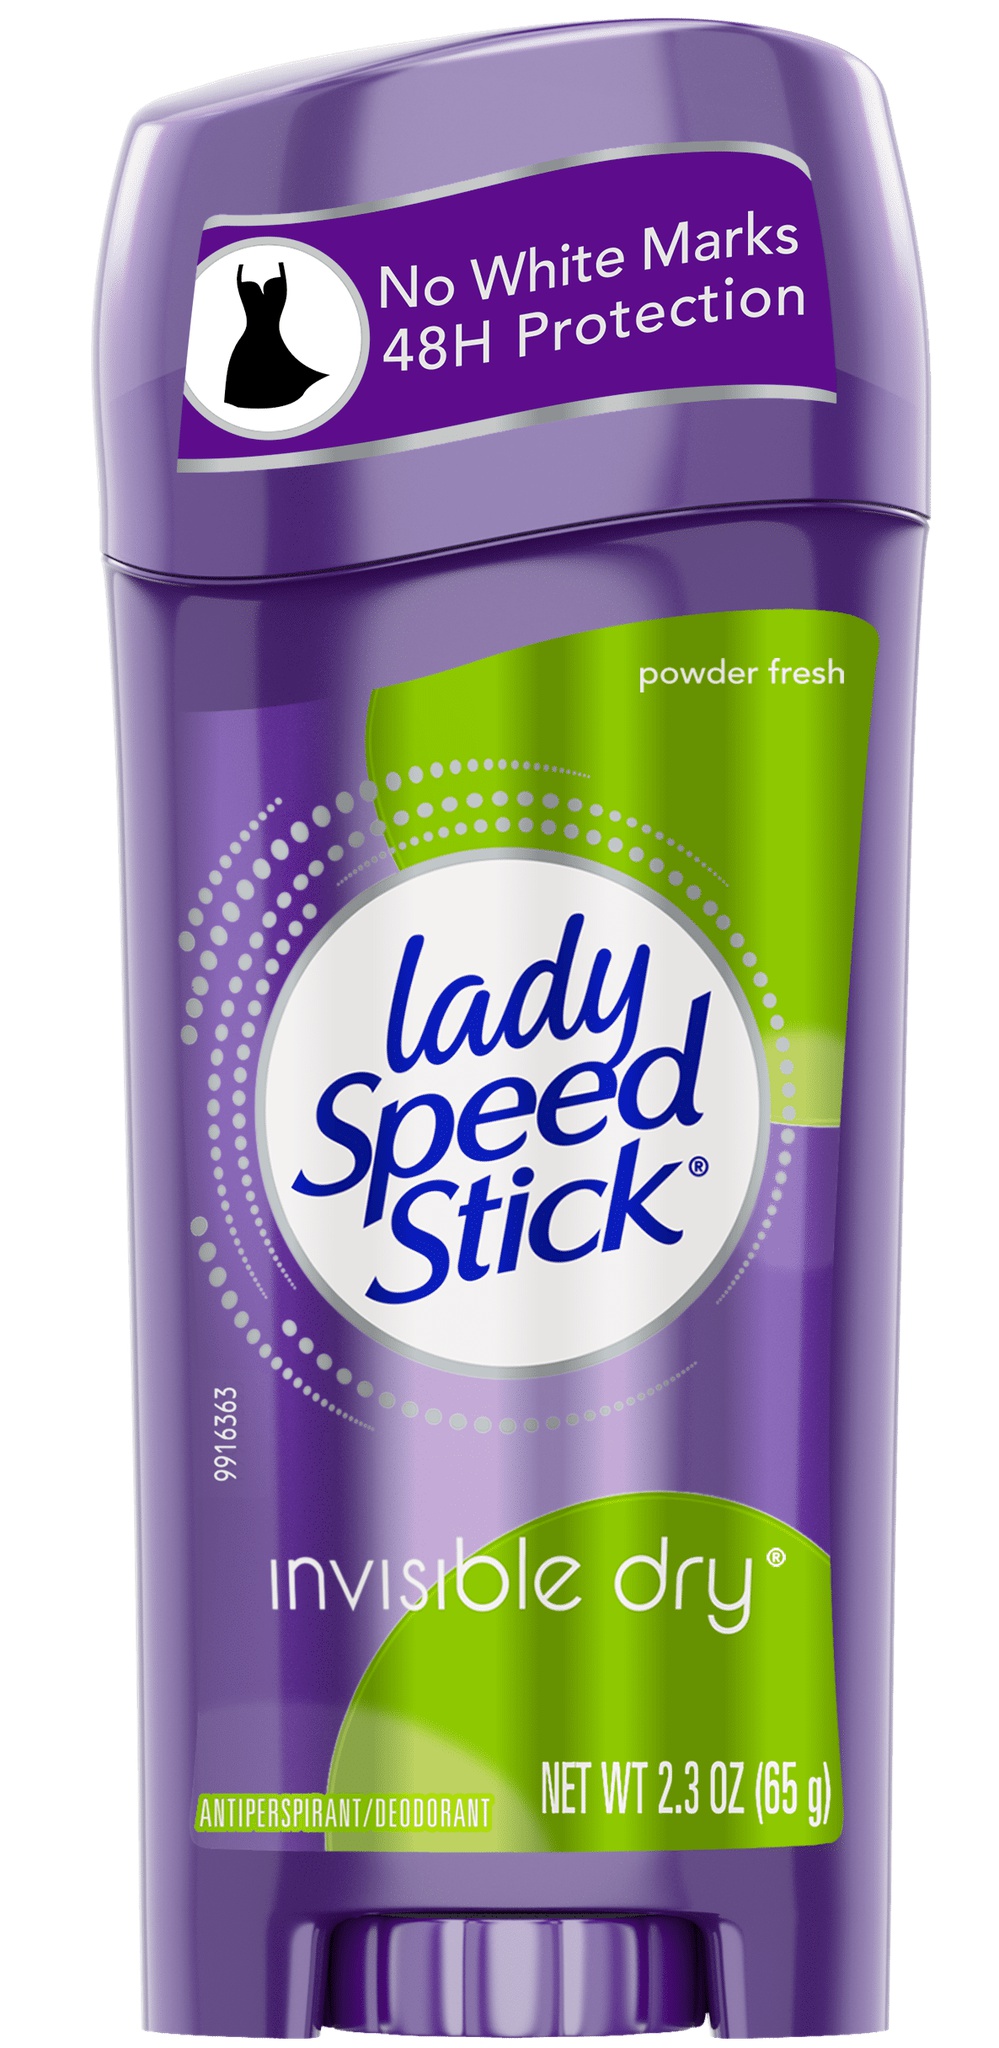 Lady speed stick Invisible Dry Powder Fresh Antiperspirant & Deodorant